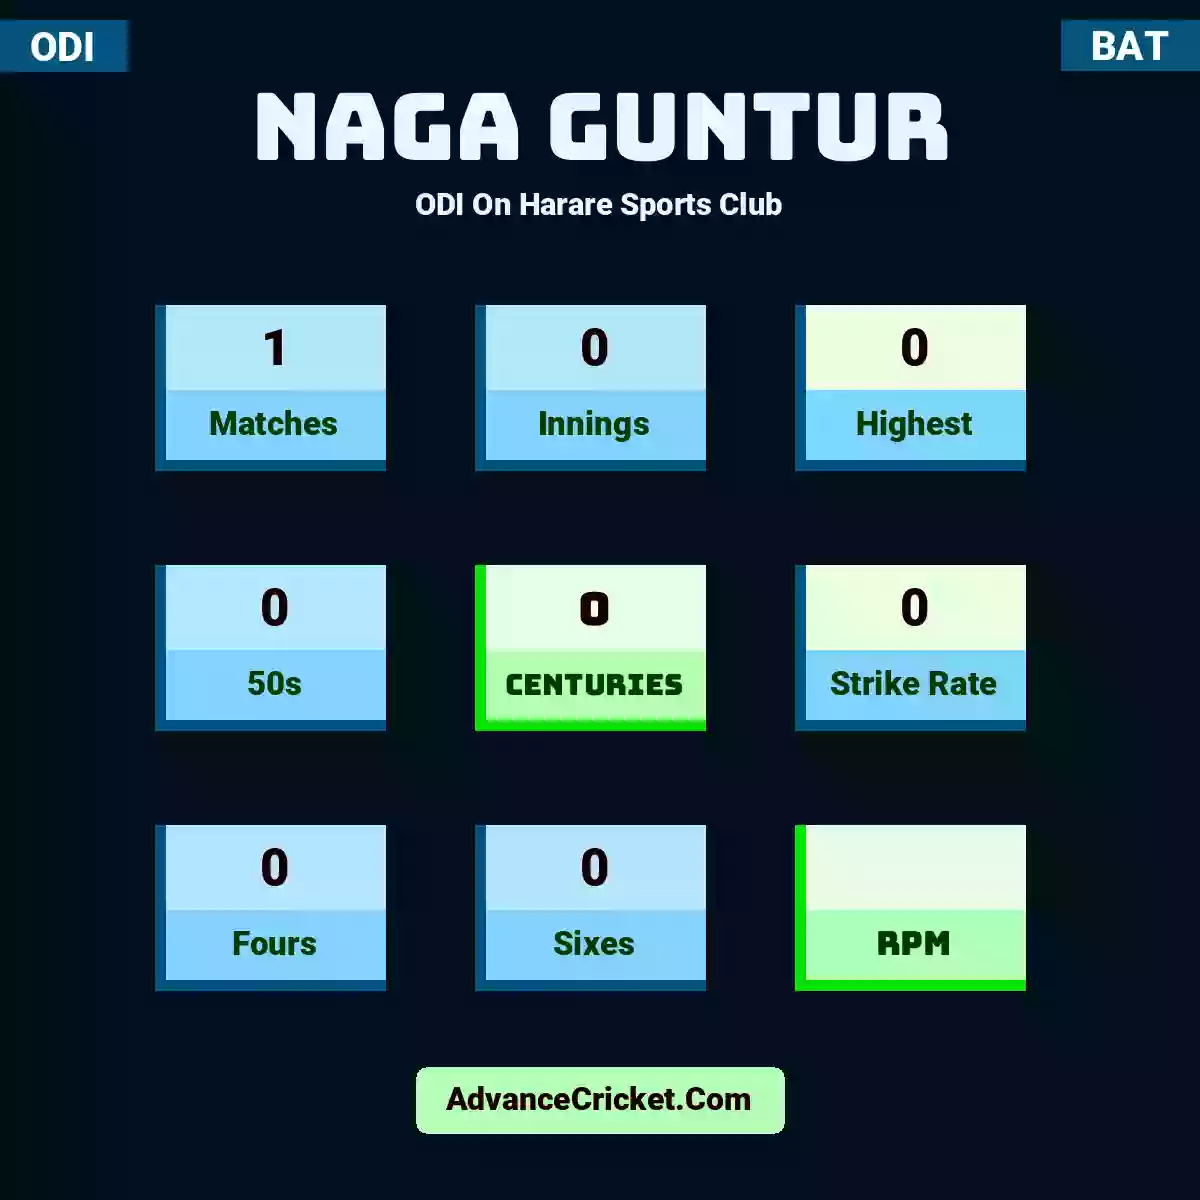 Naga Guntur ODI  On Harare Sports Club, Naga Guntur played 1 matches, scored 0 runs as highest, 0 half-centuries, and 0 centuries, with a strike rate of 0. N.Guntur hit 0 fours and 0 sixes.